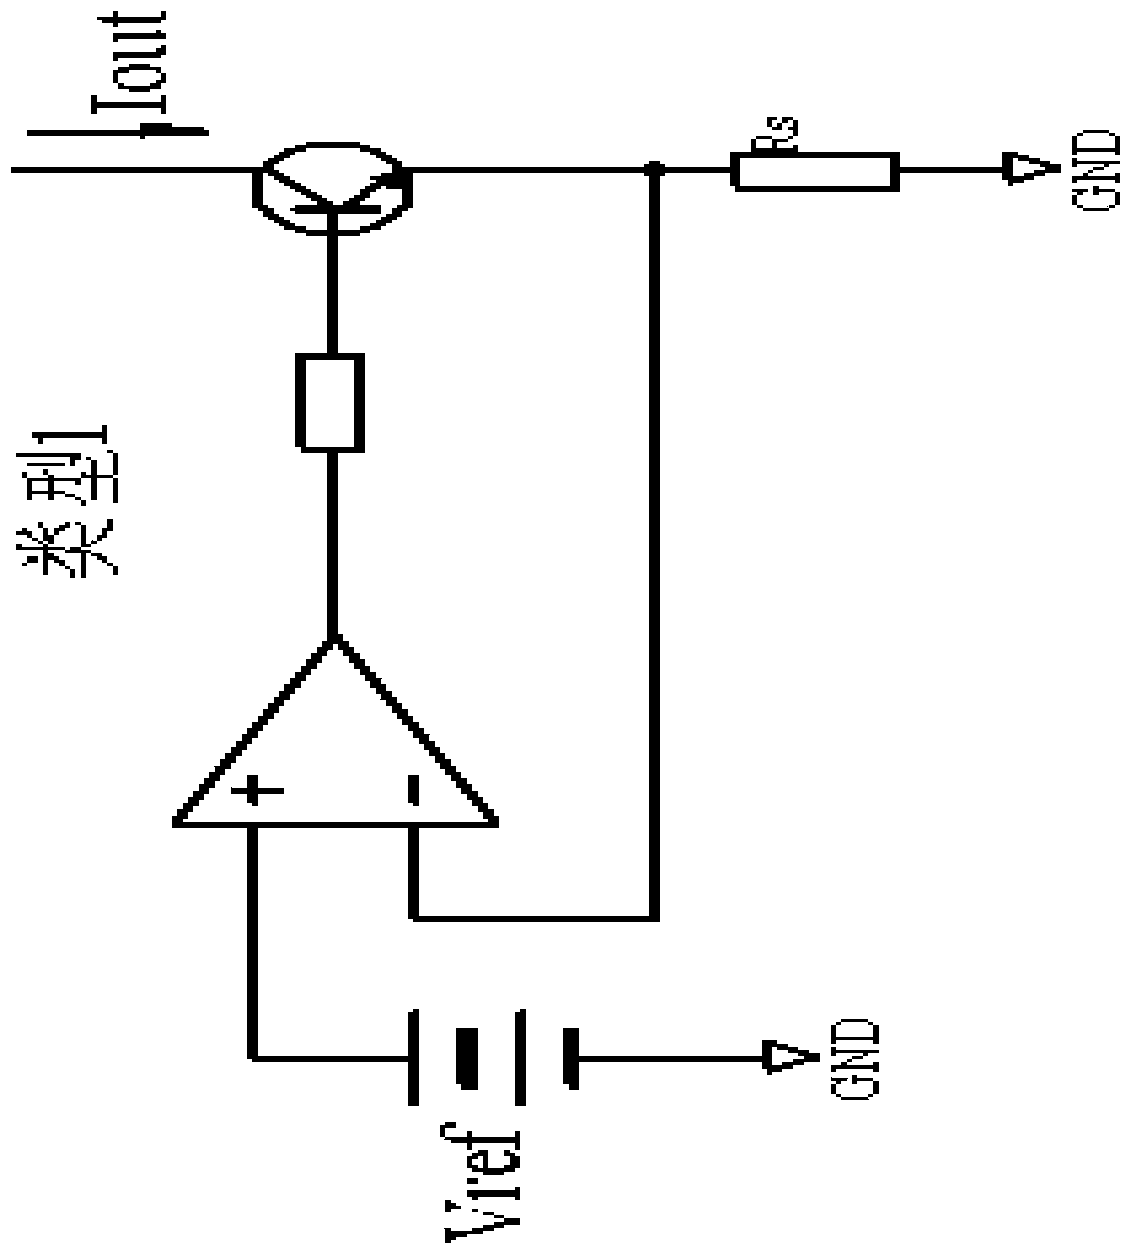 Constant current source generation circuit